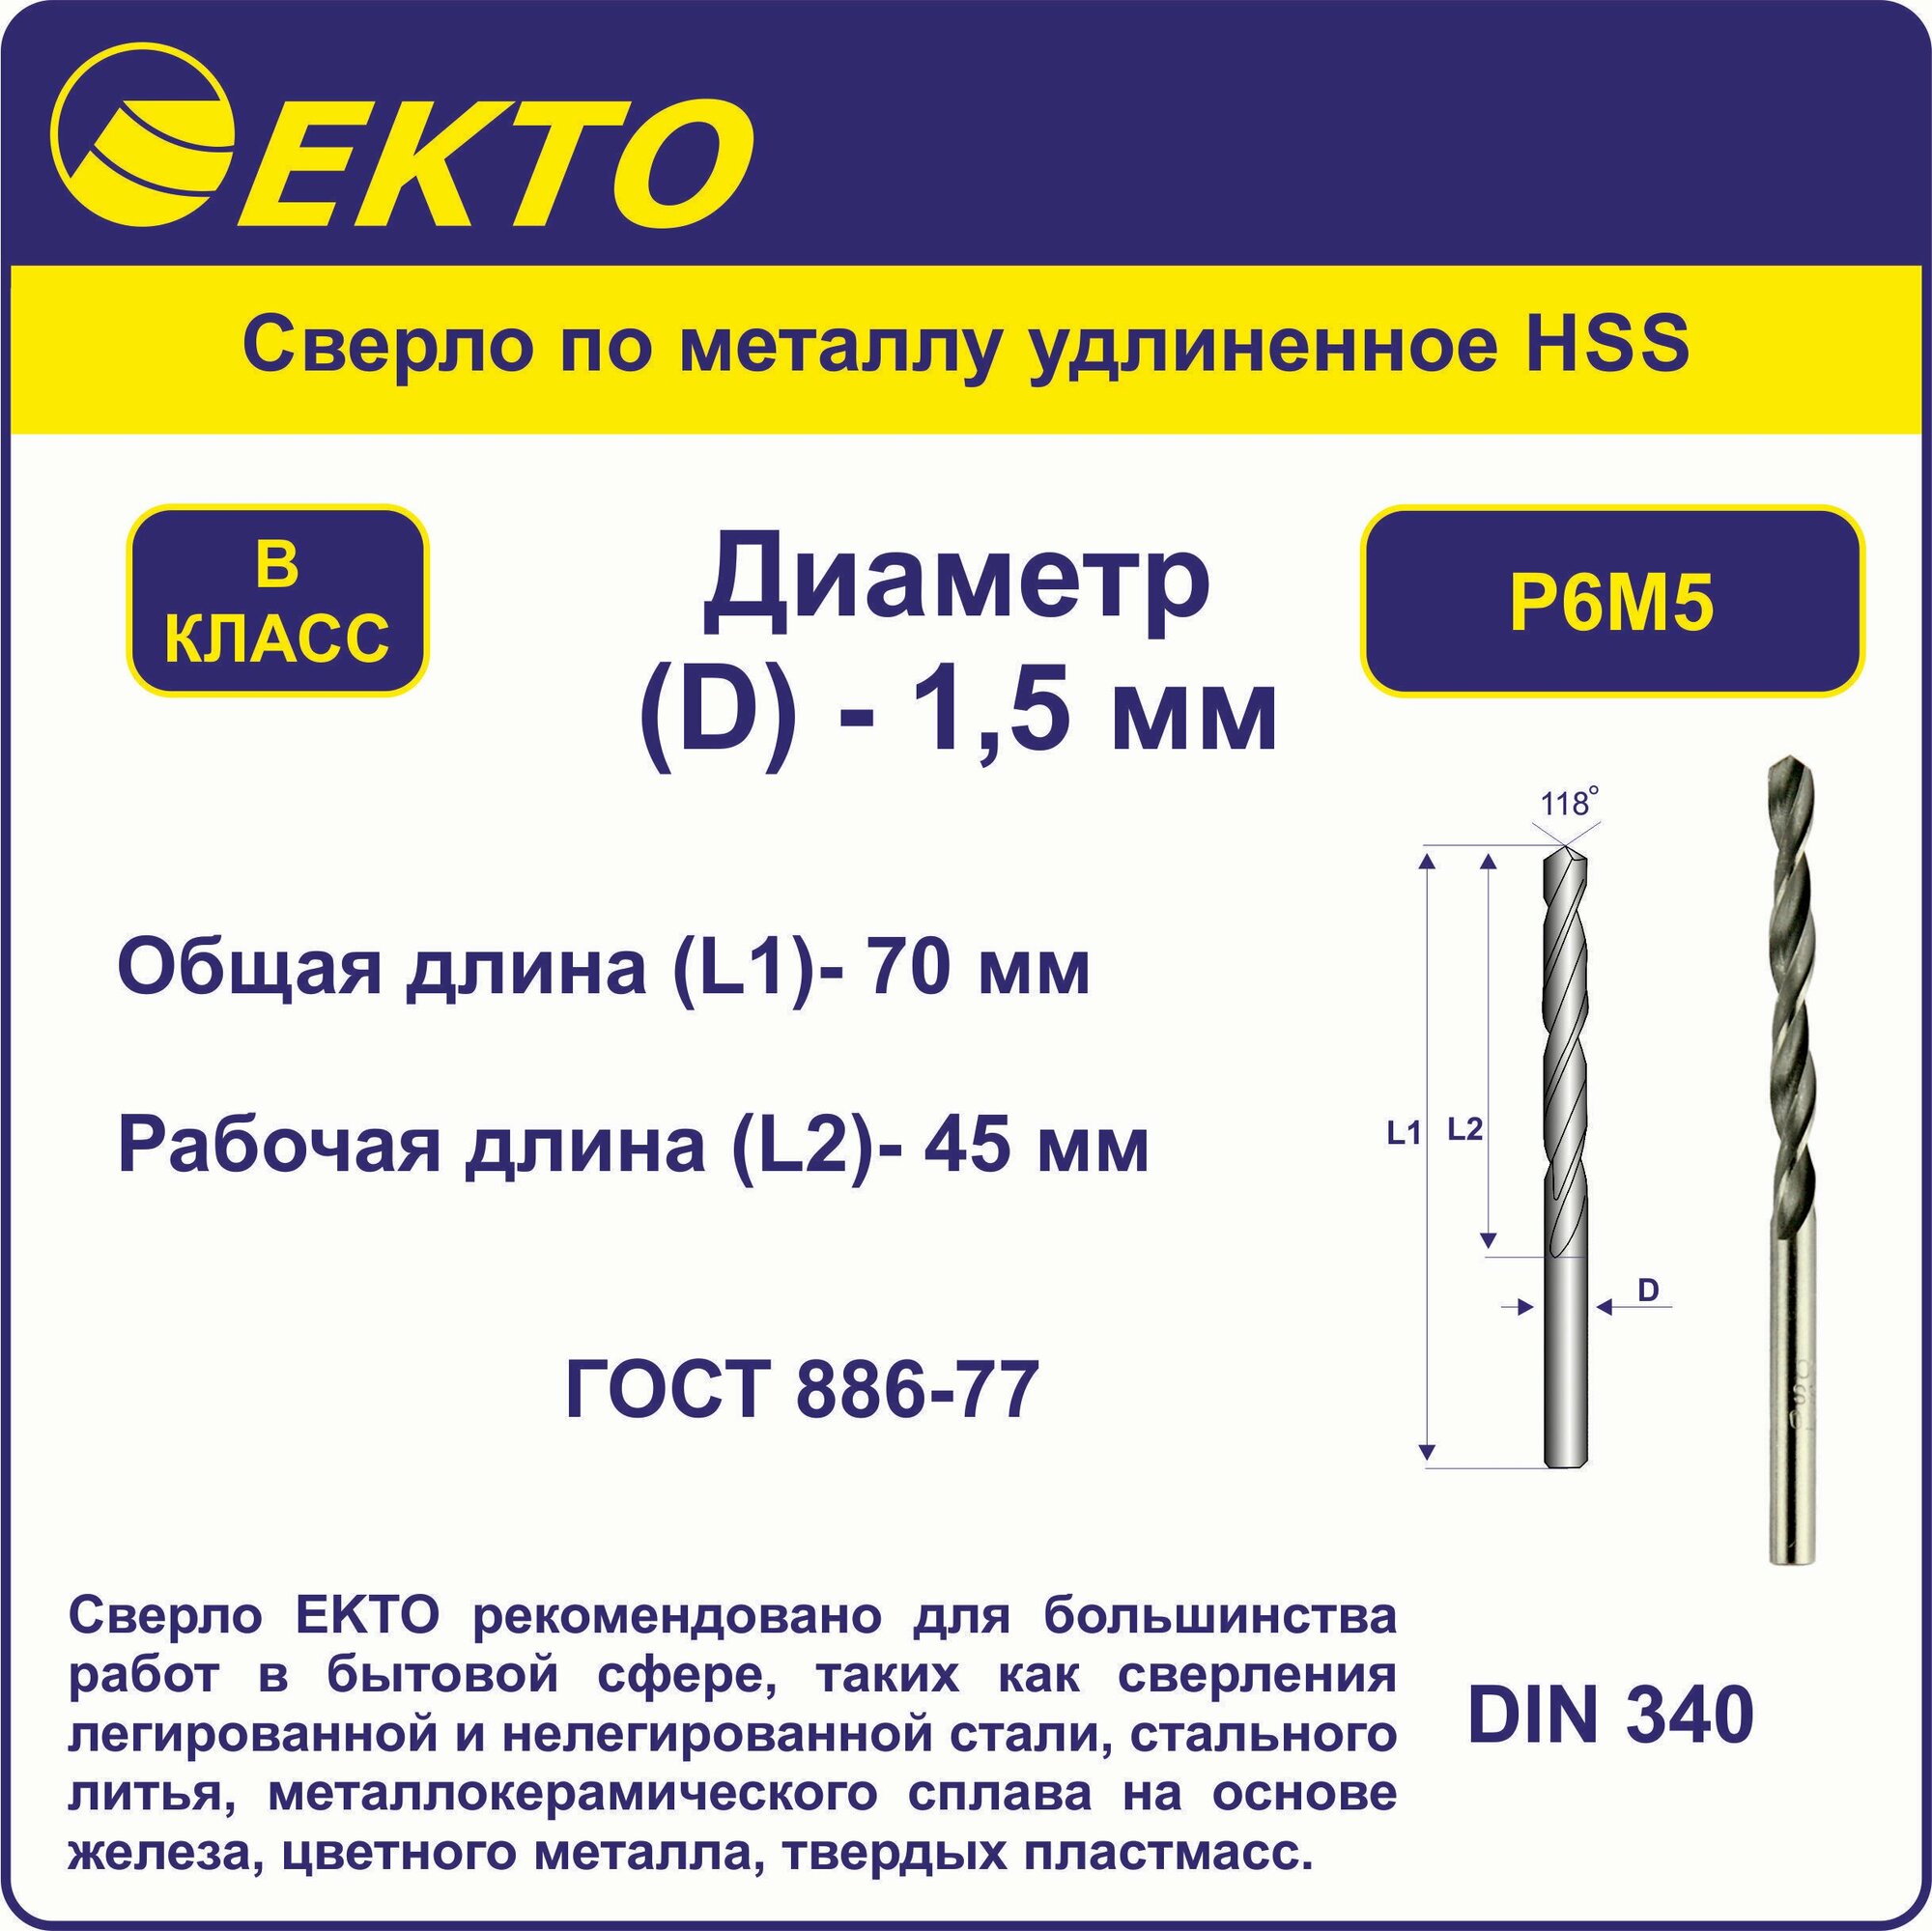 Сверло по металлу удлинённое HSS 1,5 мм цилиндрический хвостовик EKTO